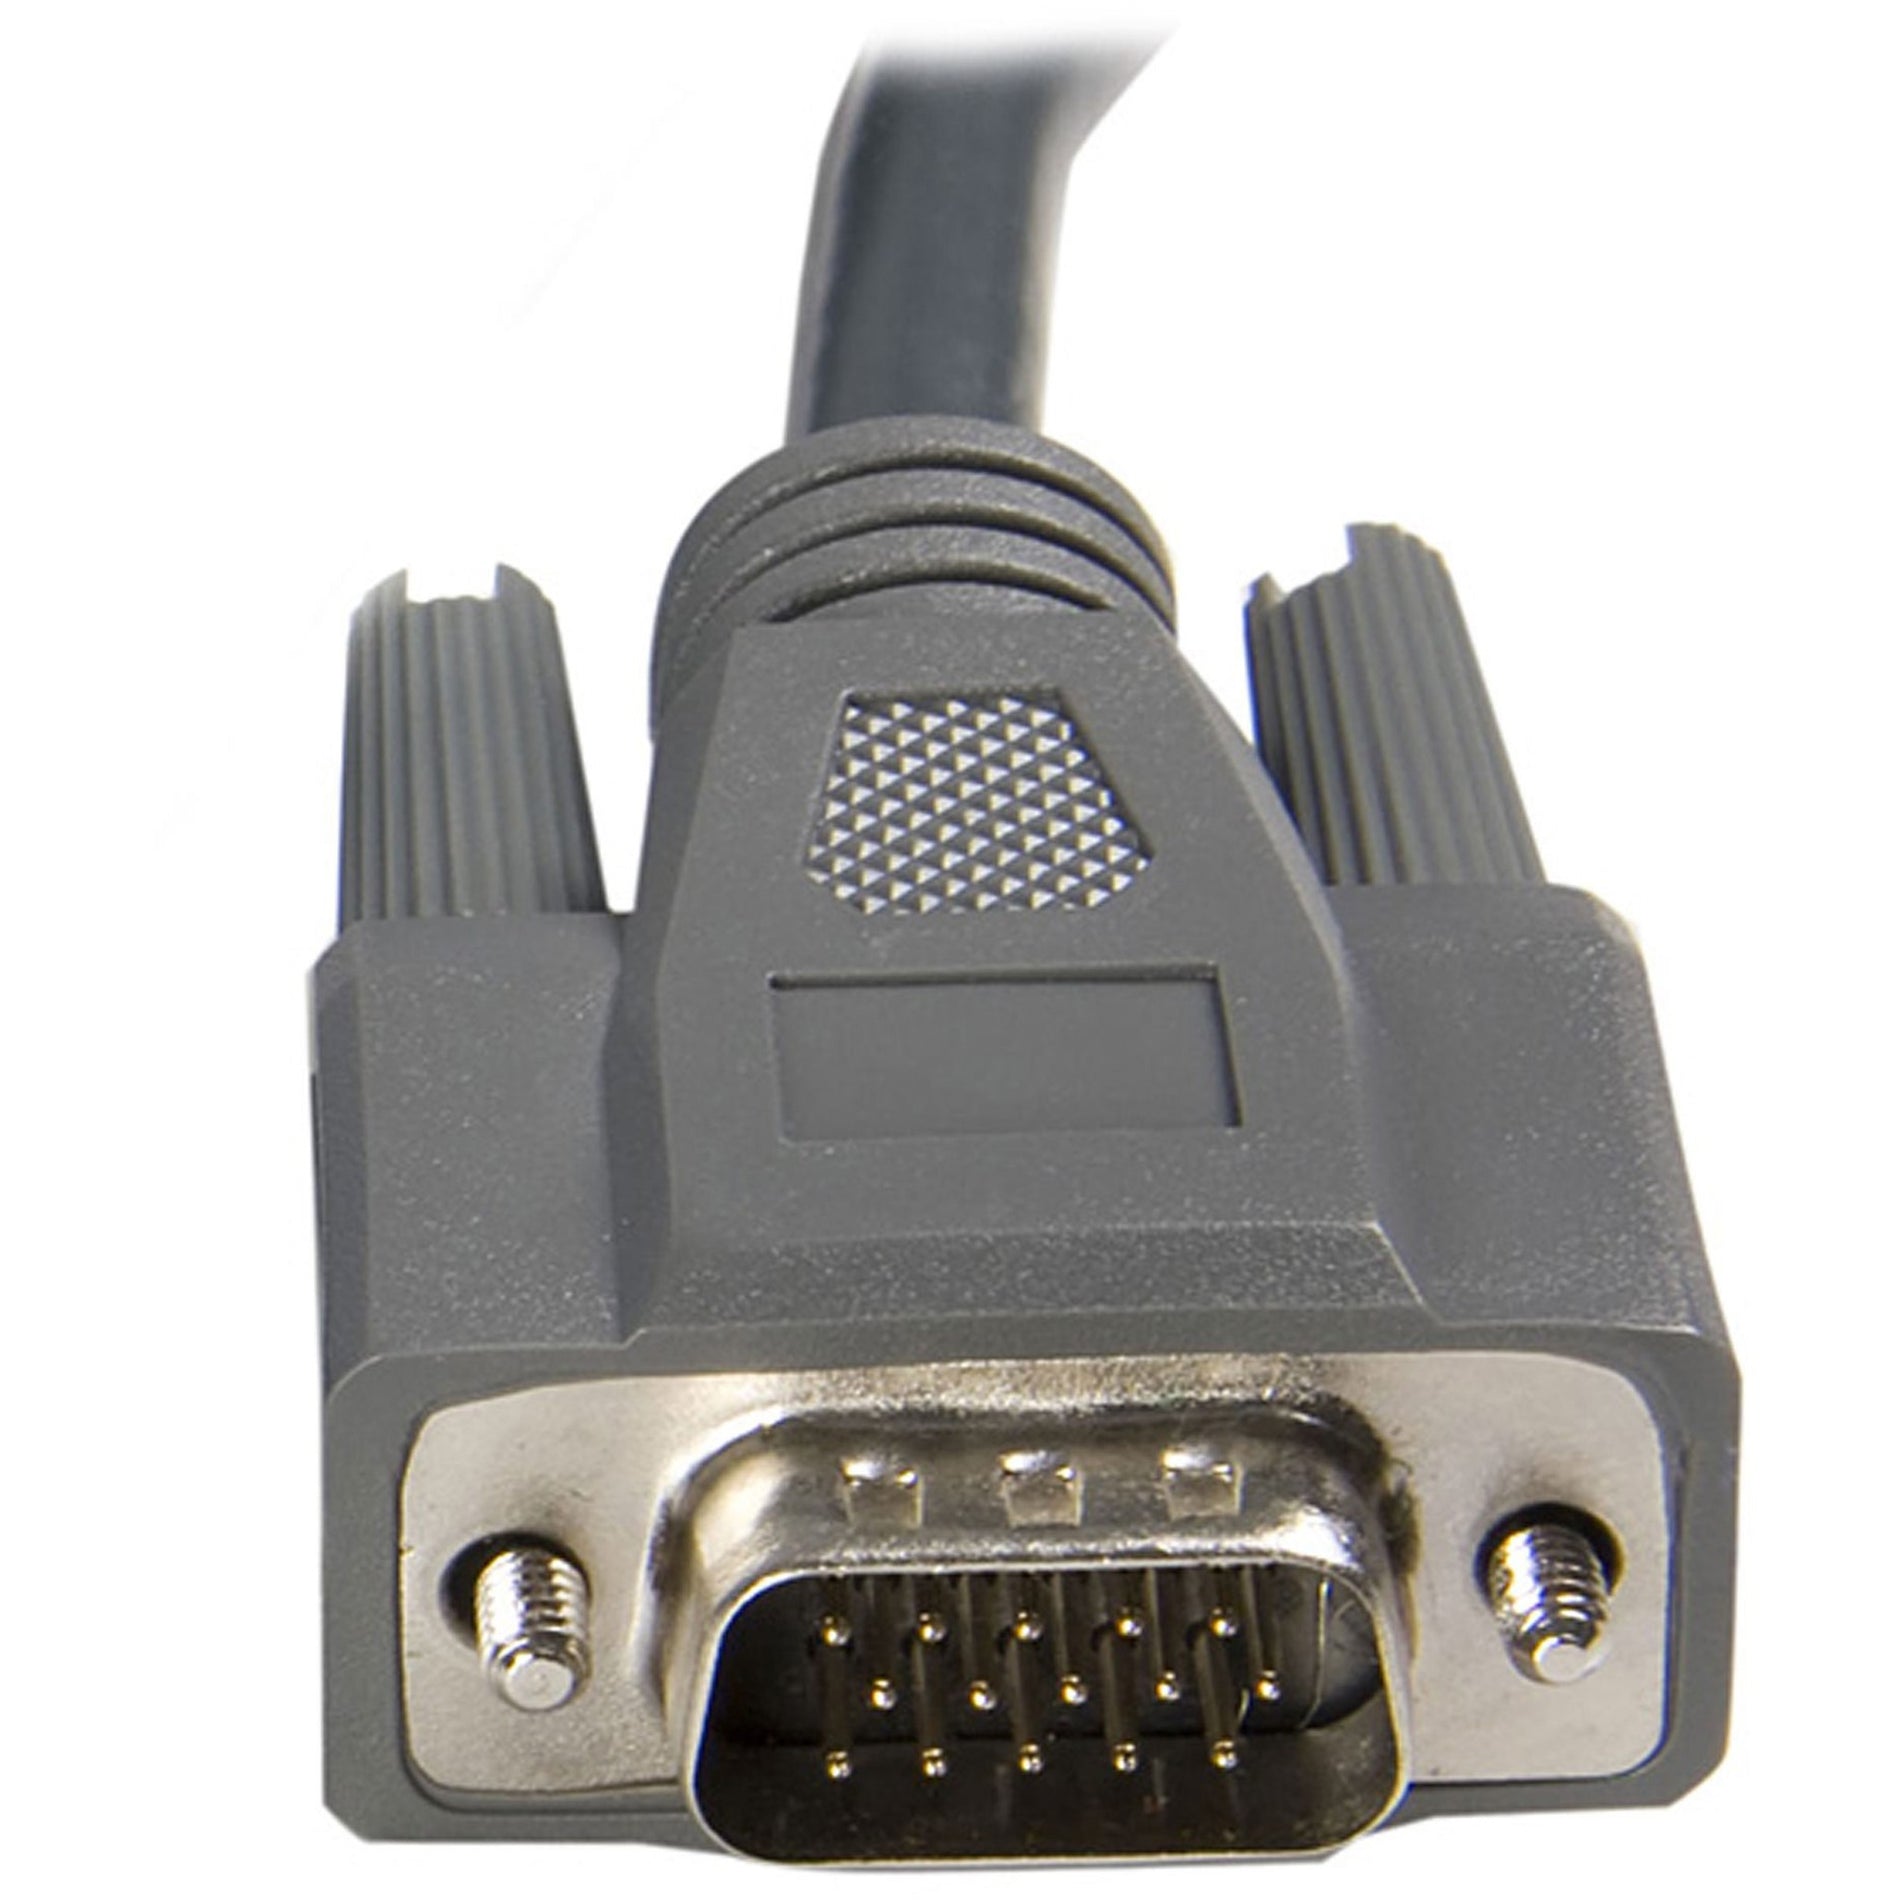 StarTech.com SVUSBVGA6 Ultra-Thin USB VGA 2-in-1 KVM Cable, 6 ft, Tangle Resistant